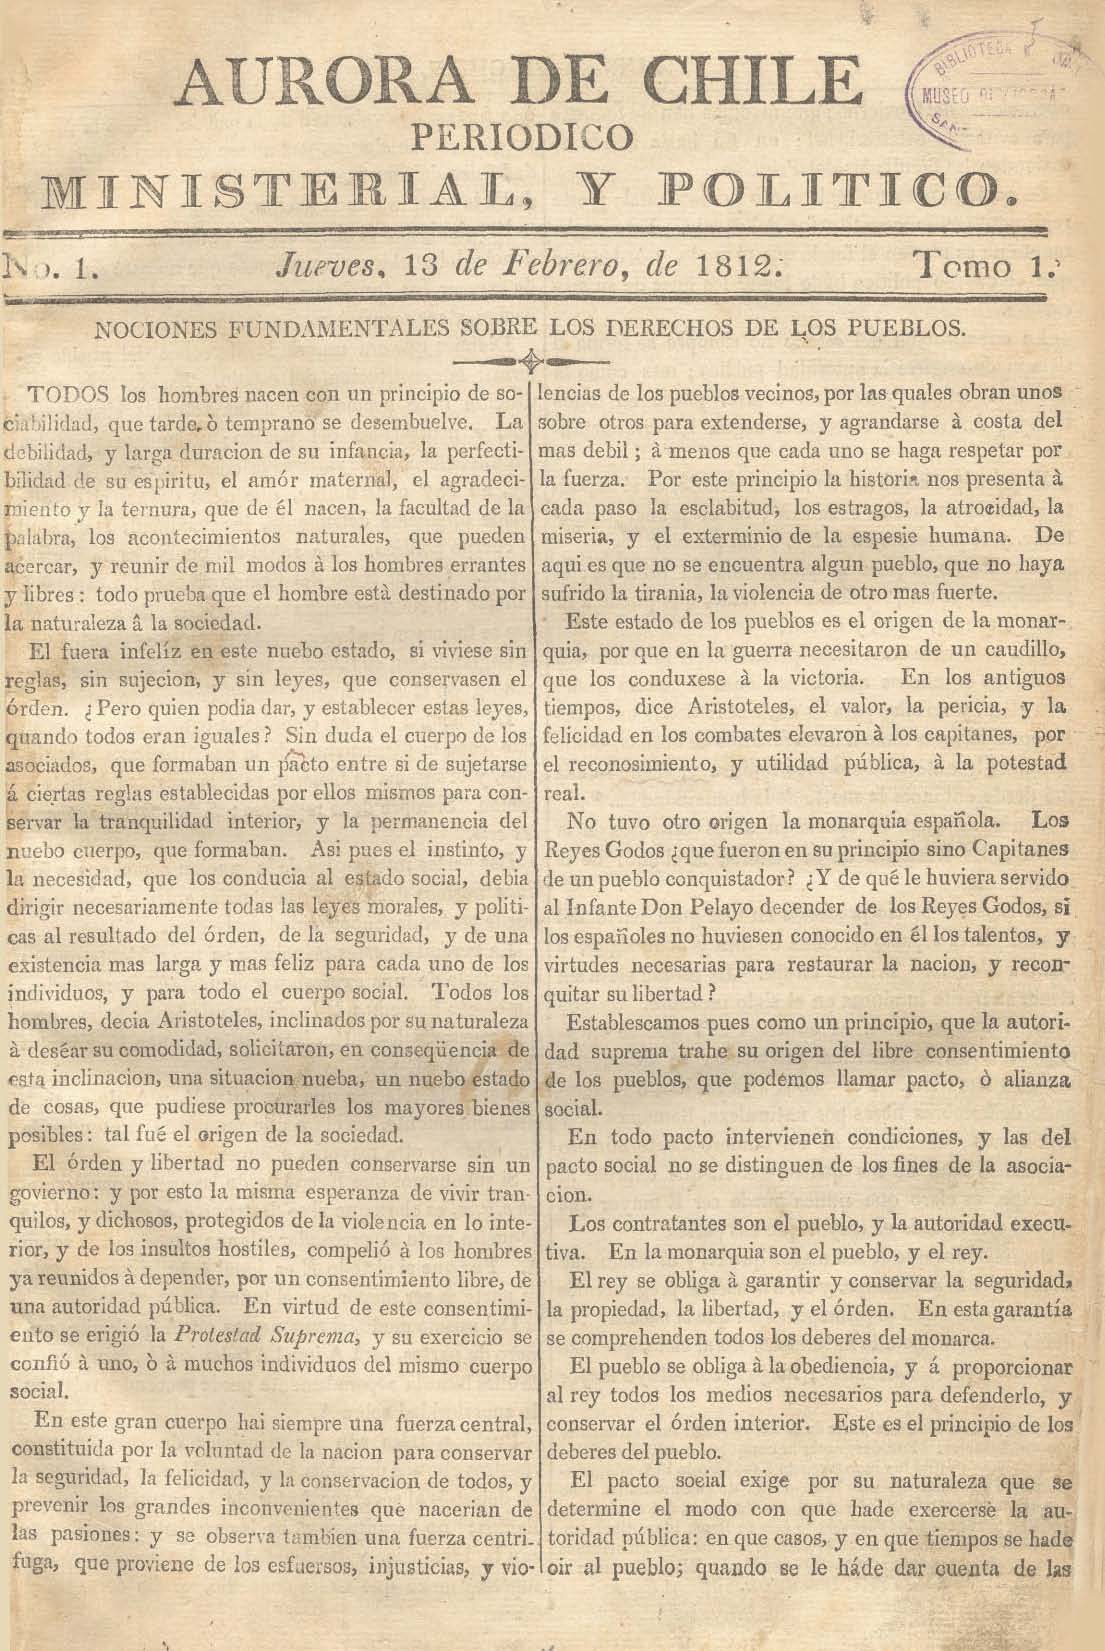 											Ver Núm. 1 (1812): Tomo I. Jueves 13 de Febrero
										